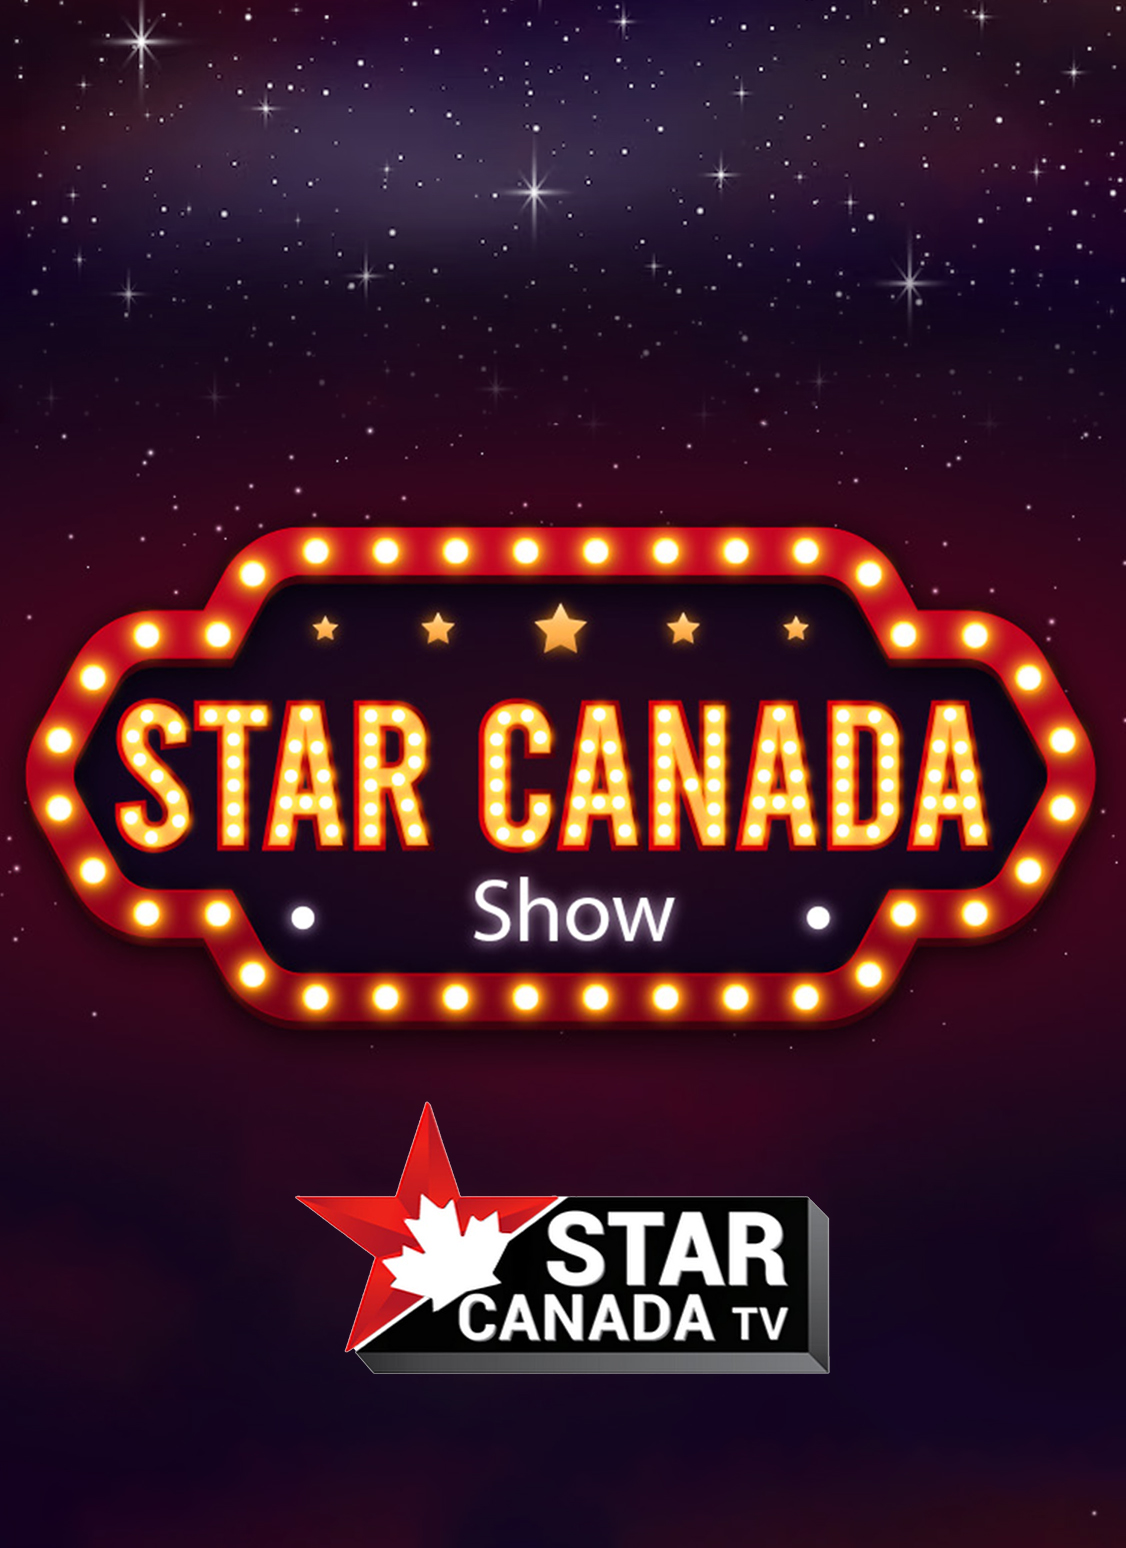 Star Canada Show